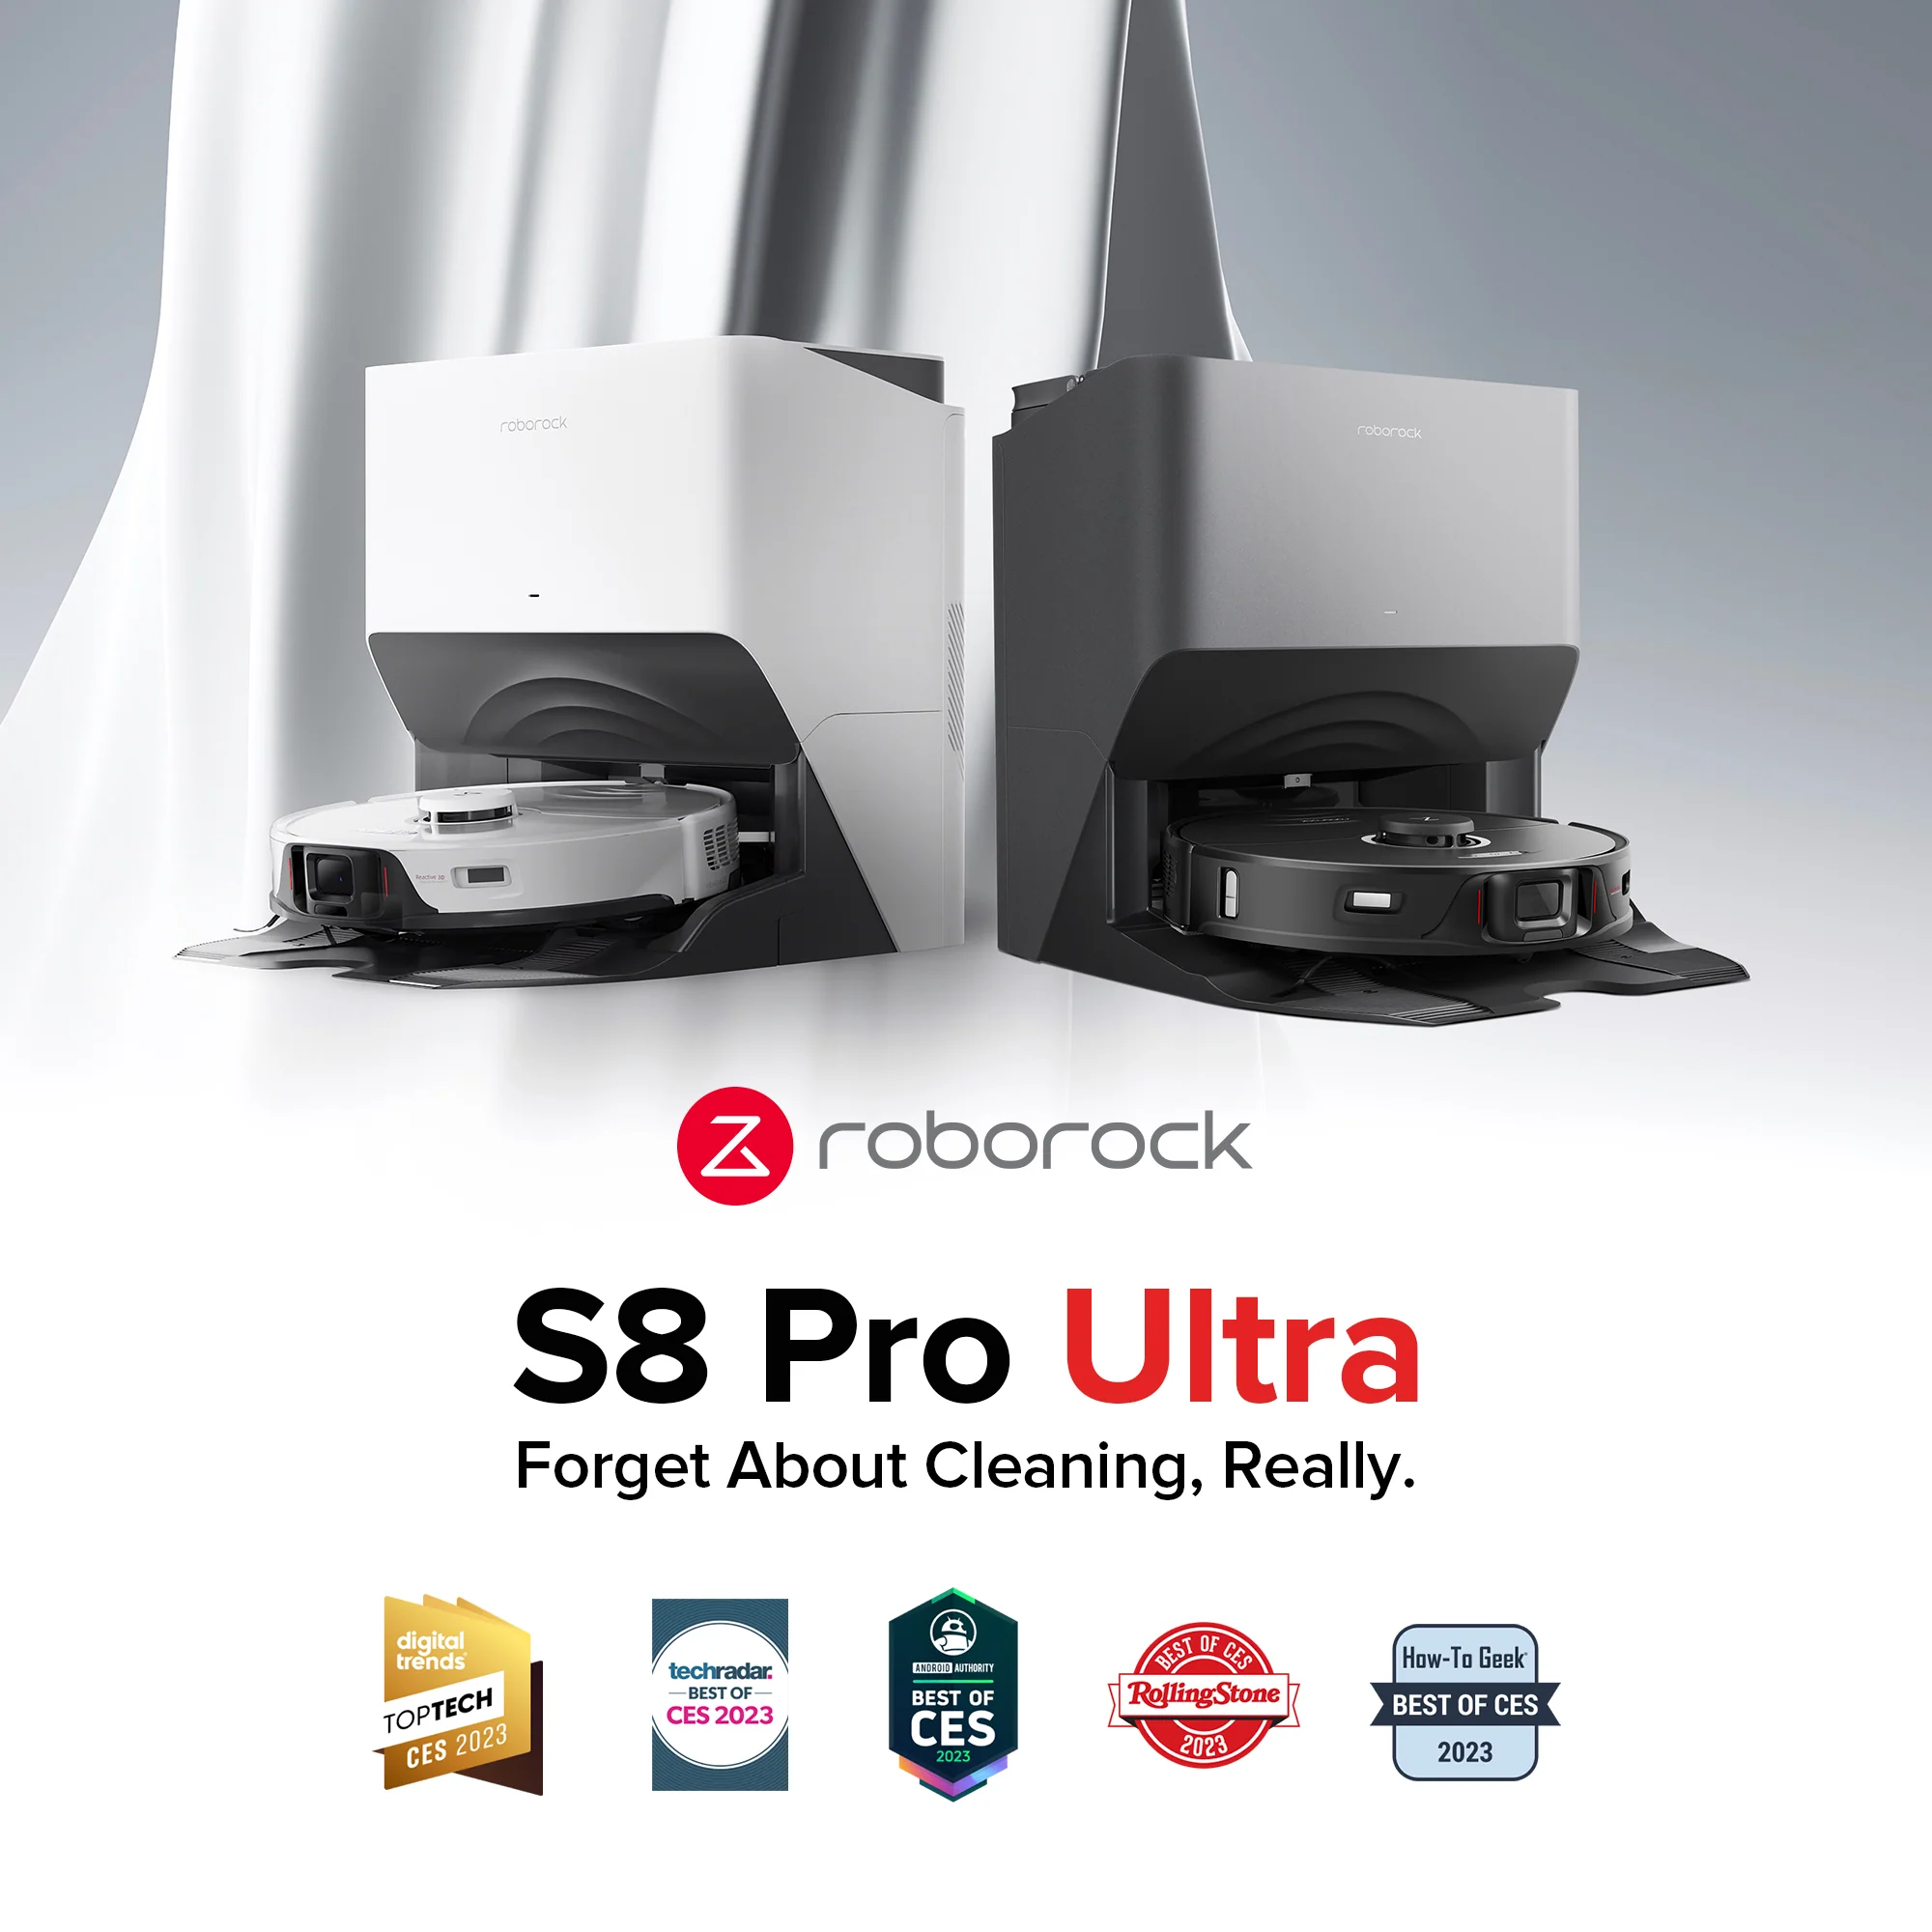 Roborock S8 Pro Ultra Review